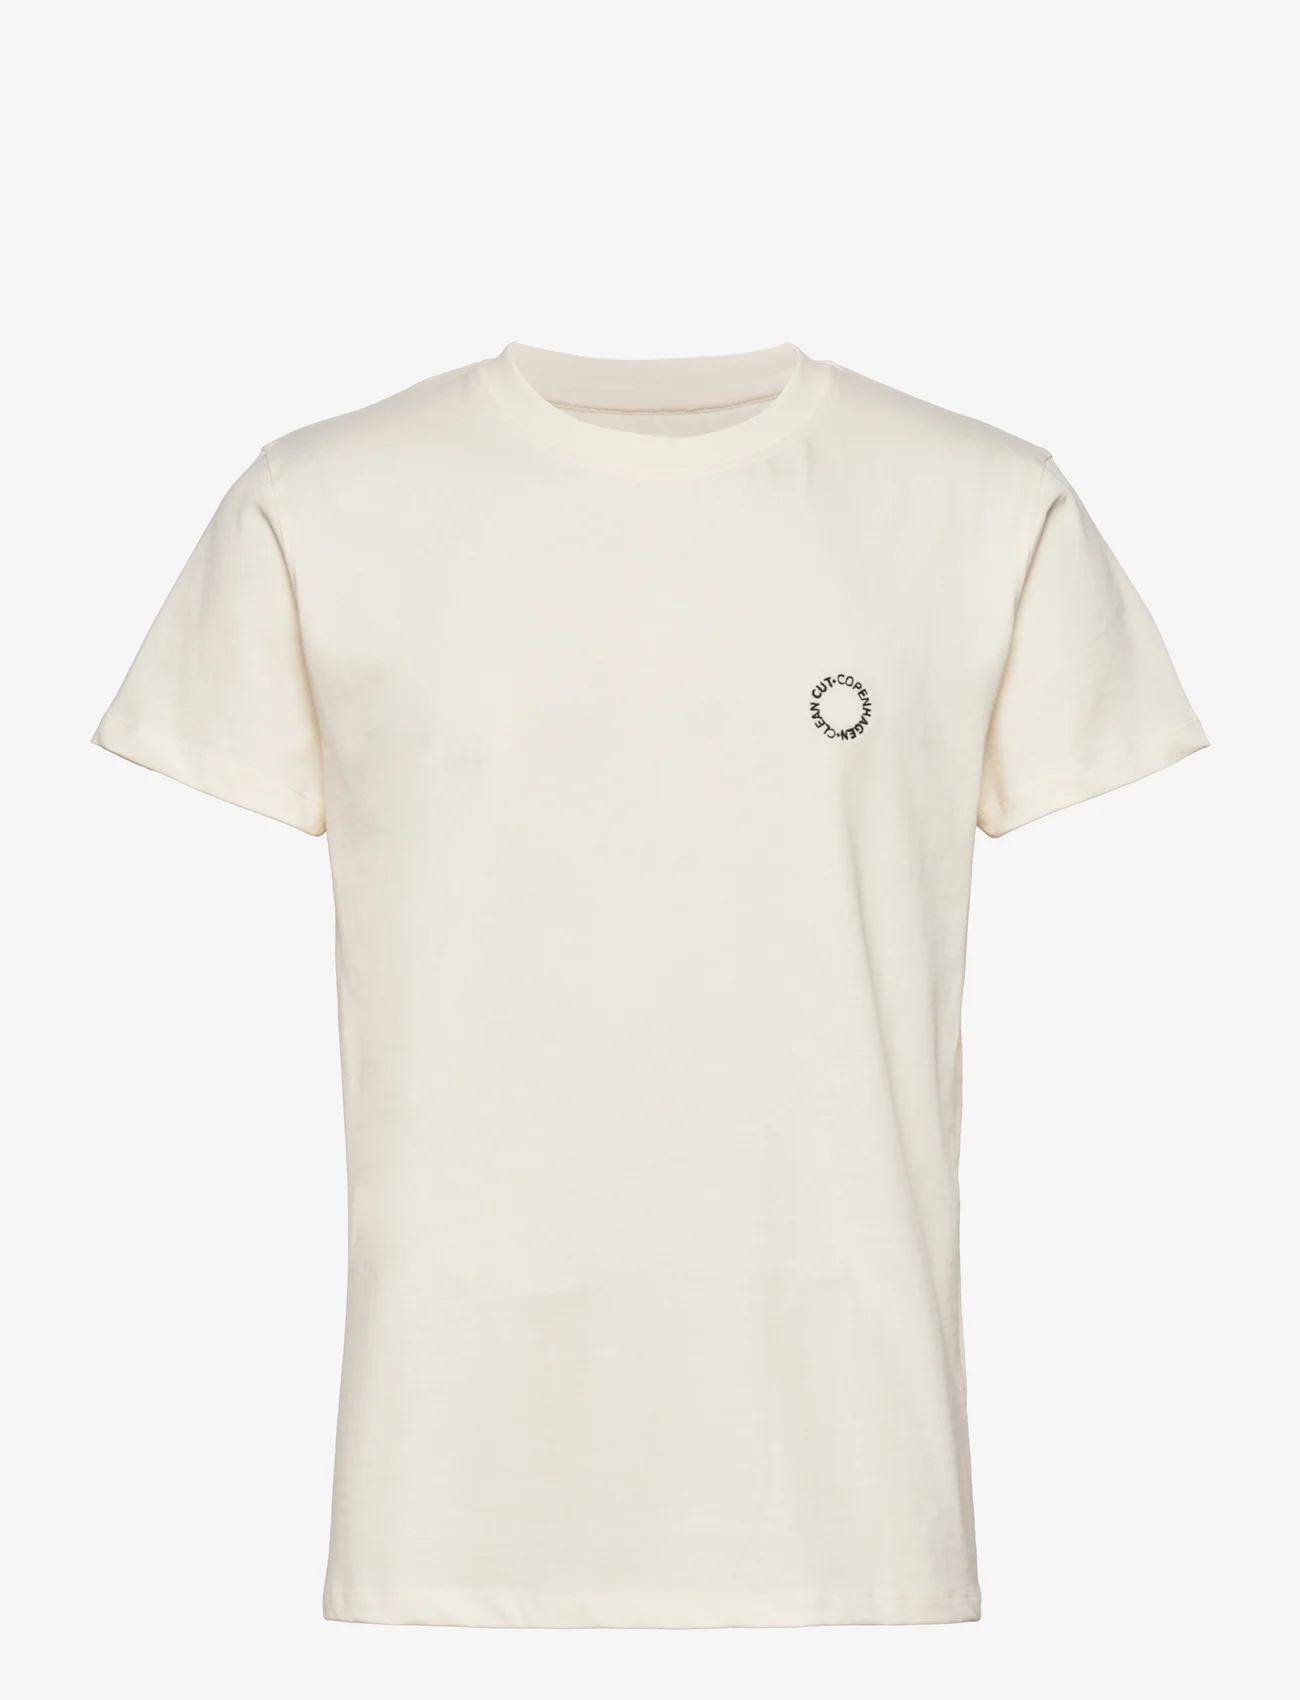 Clean Cut Copenhagen - Stanley Organic Tee - basic t-shirts - ecru - 0